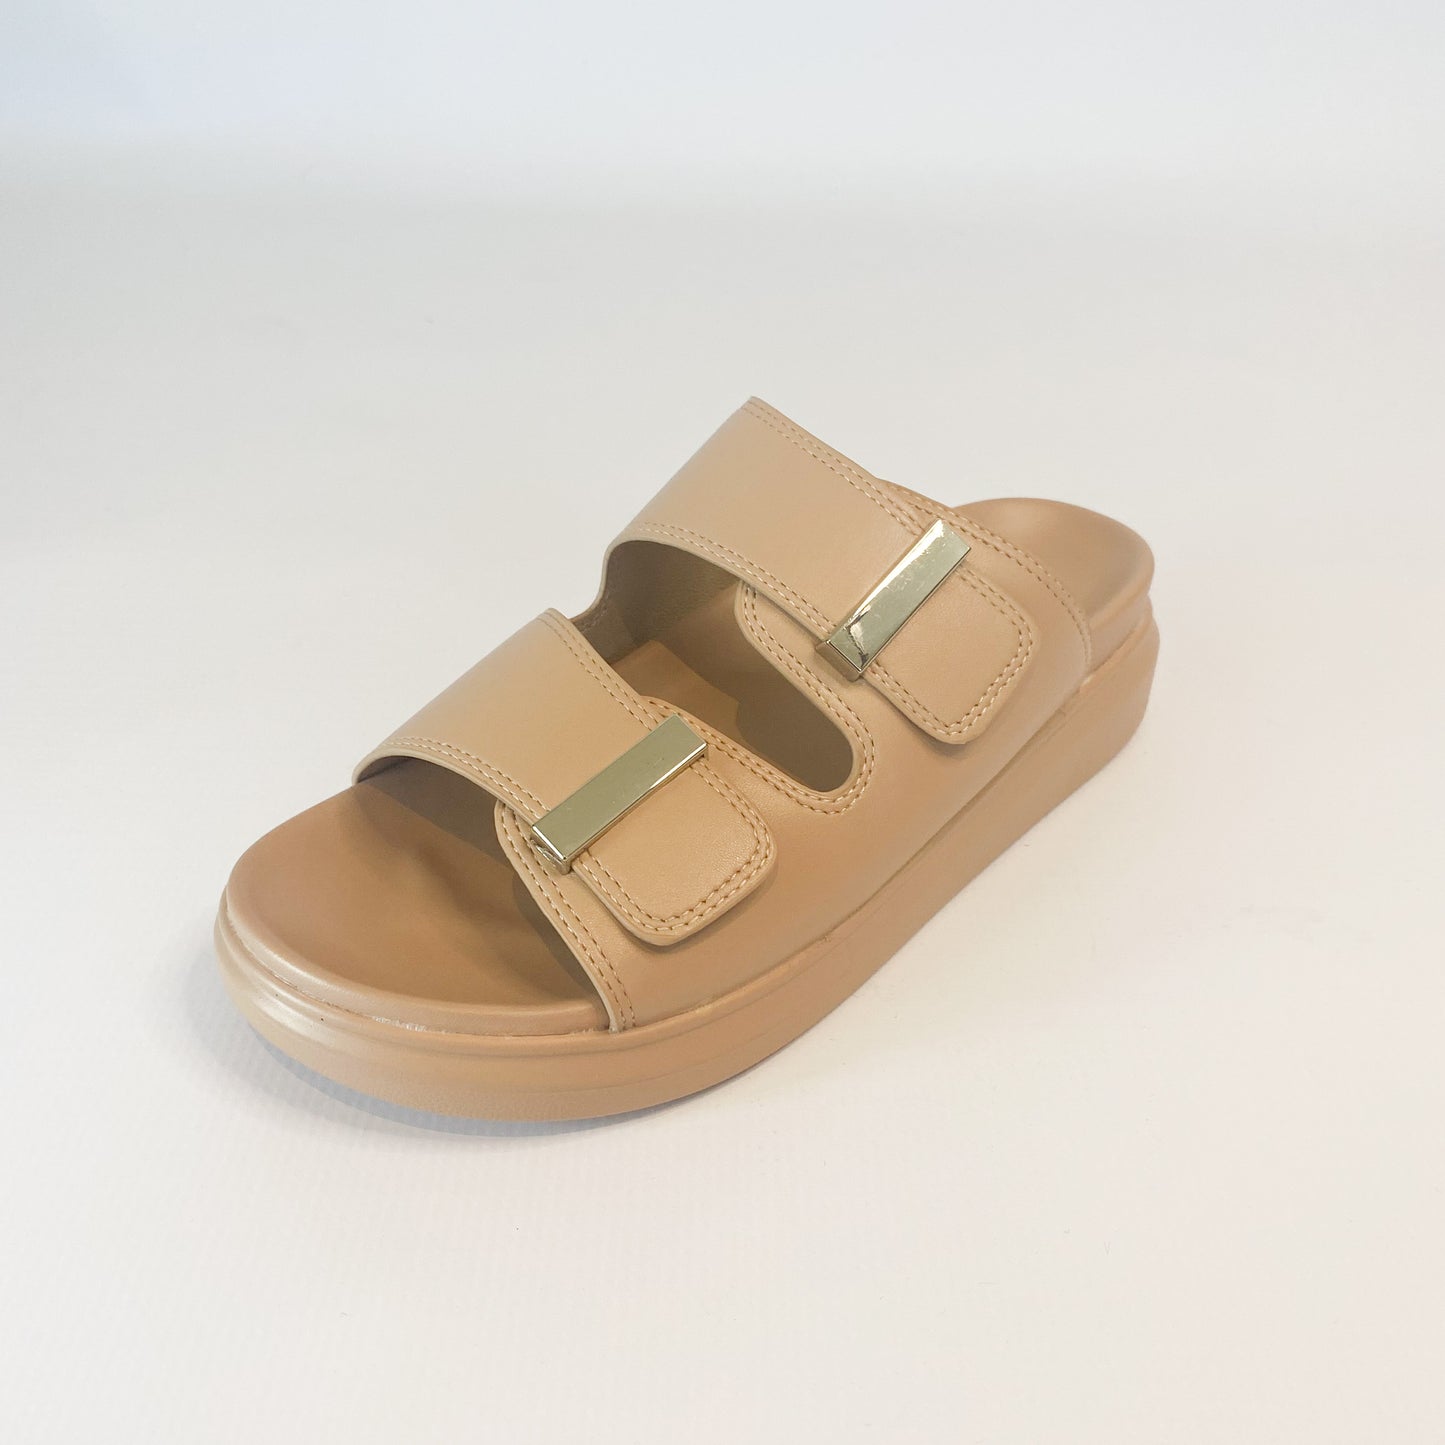 KG beige double strap sandal